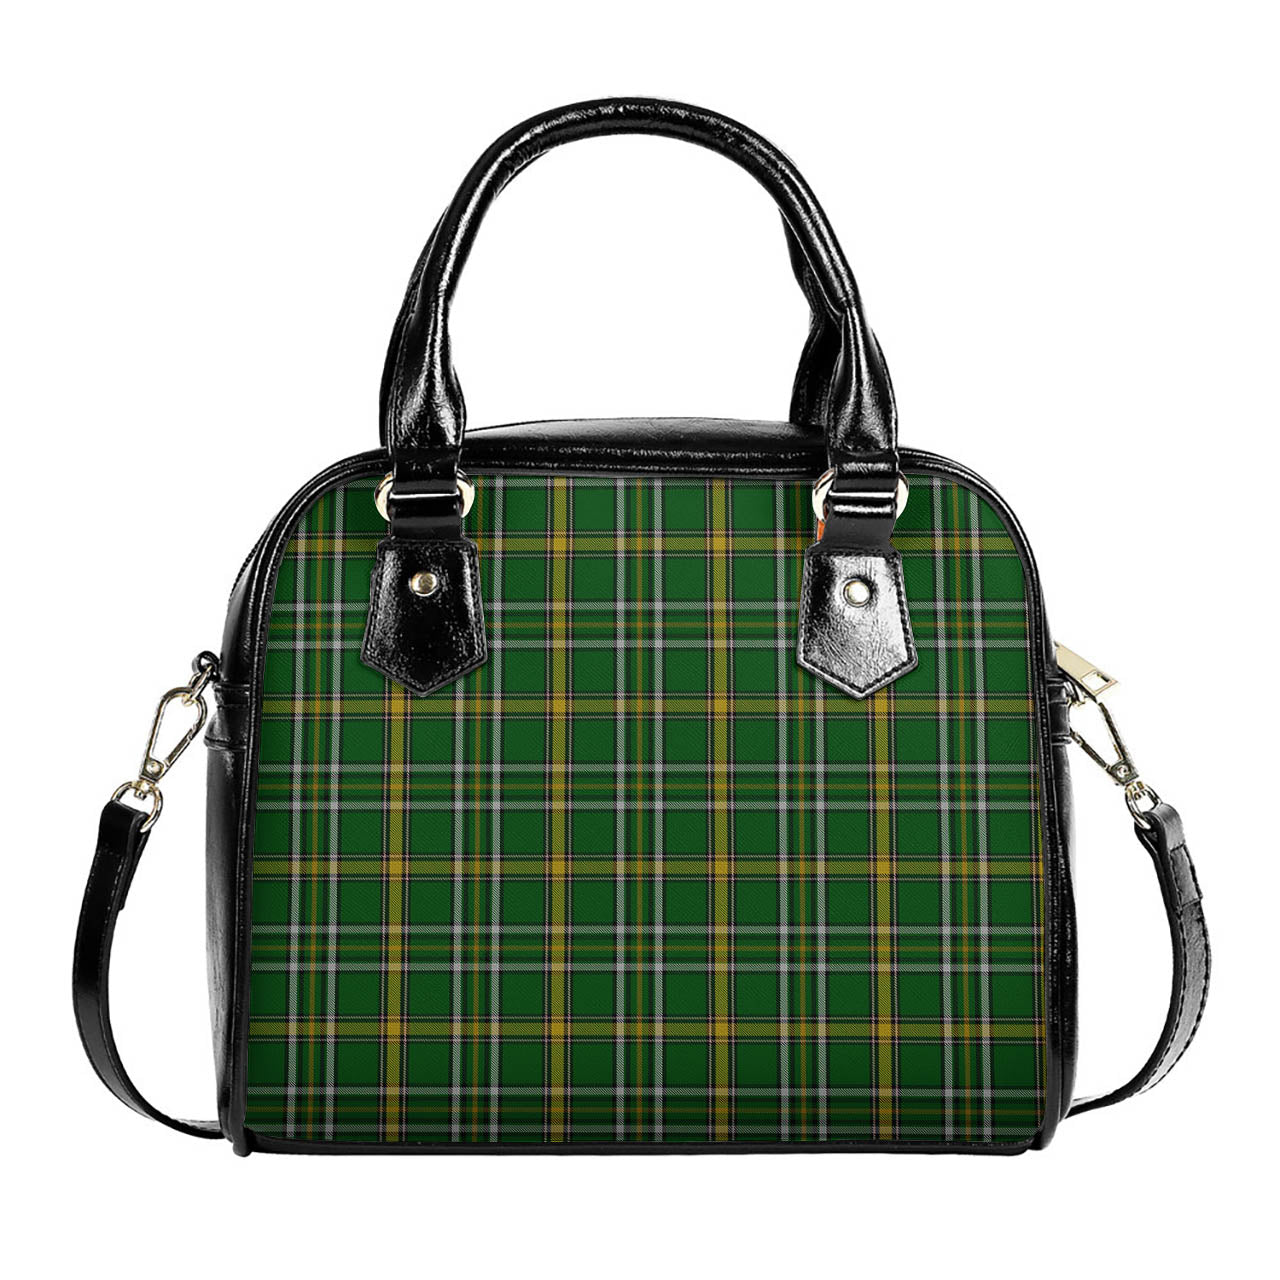 Offaly County Ireland Tartan Shoulder Handbags One Size 6*25*22 cm - Tartanvibesclothing